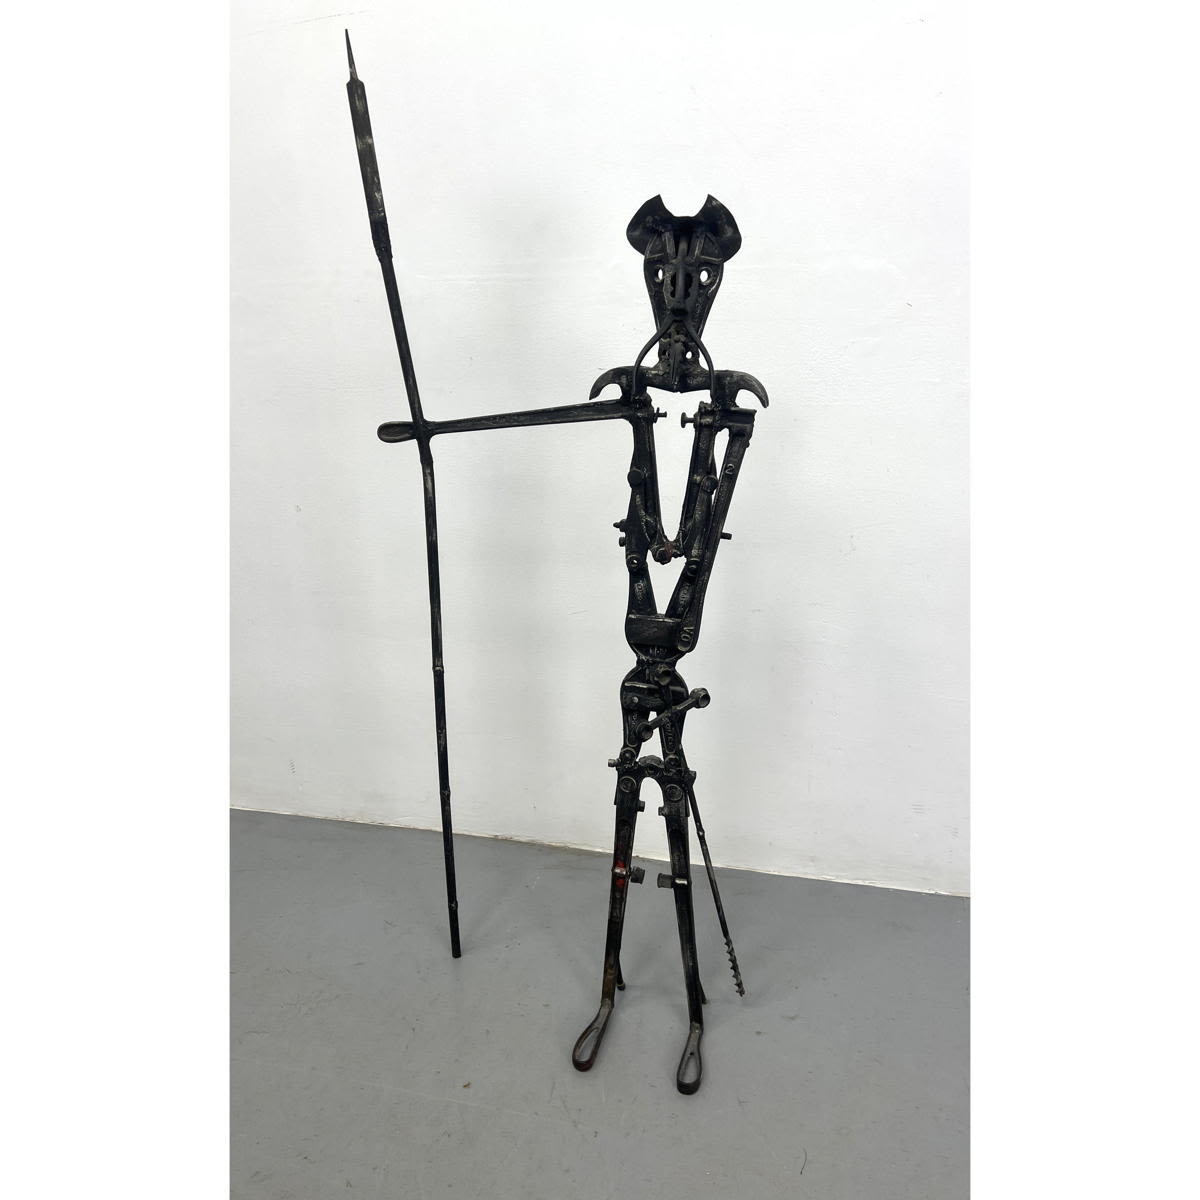 Found Objects Art Don Quixote figure